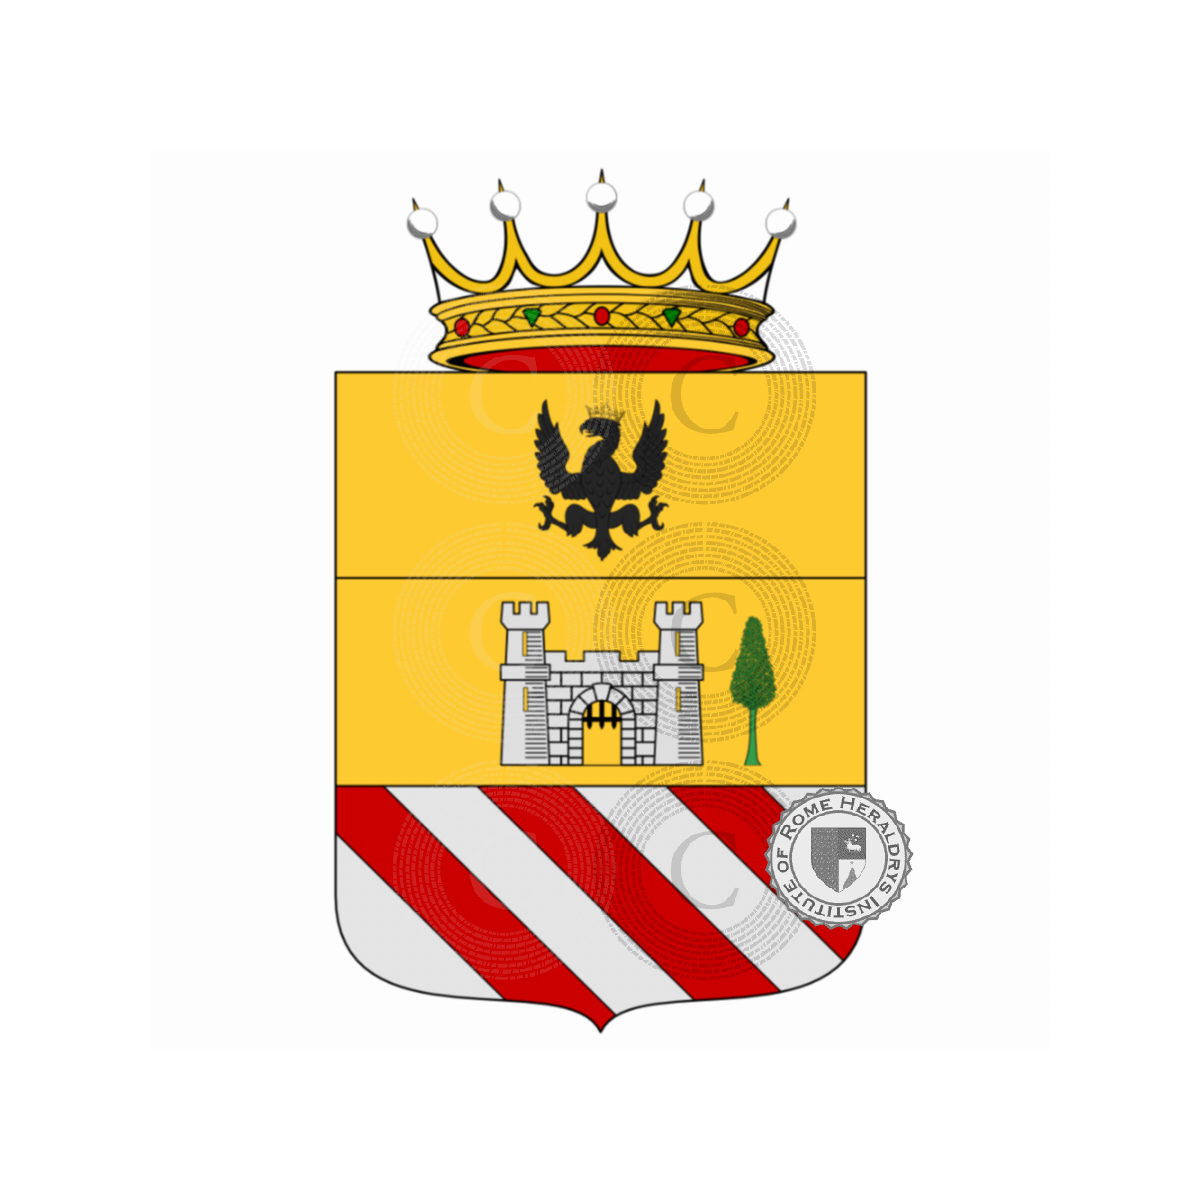 Wappen der FamilieSala, de Sala,della Sala